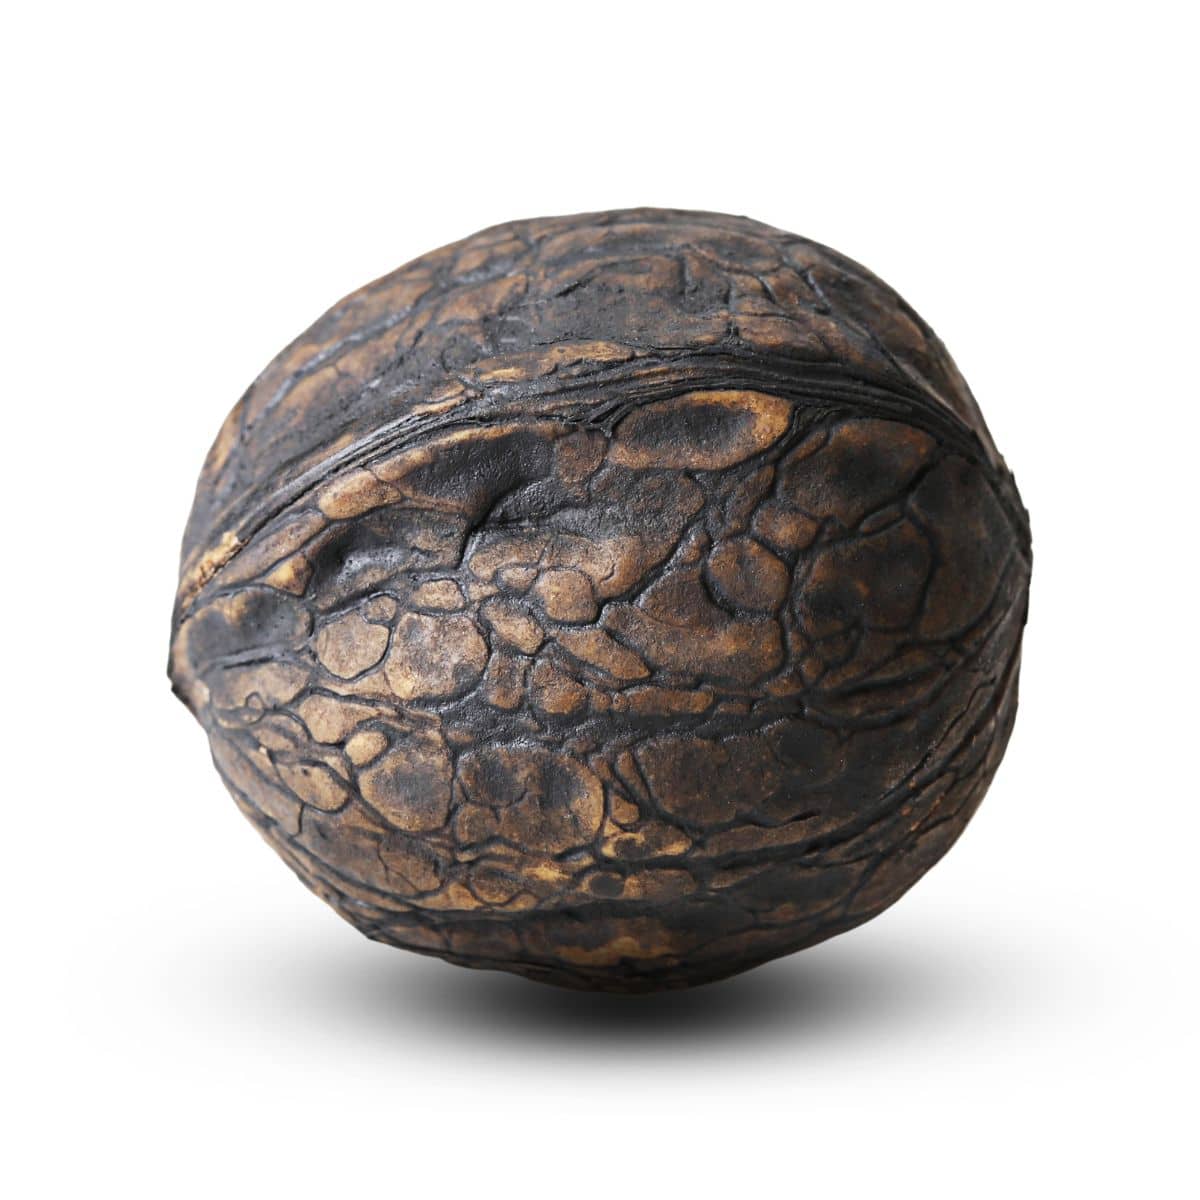 Andean walnut image.